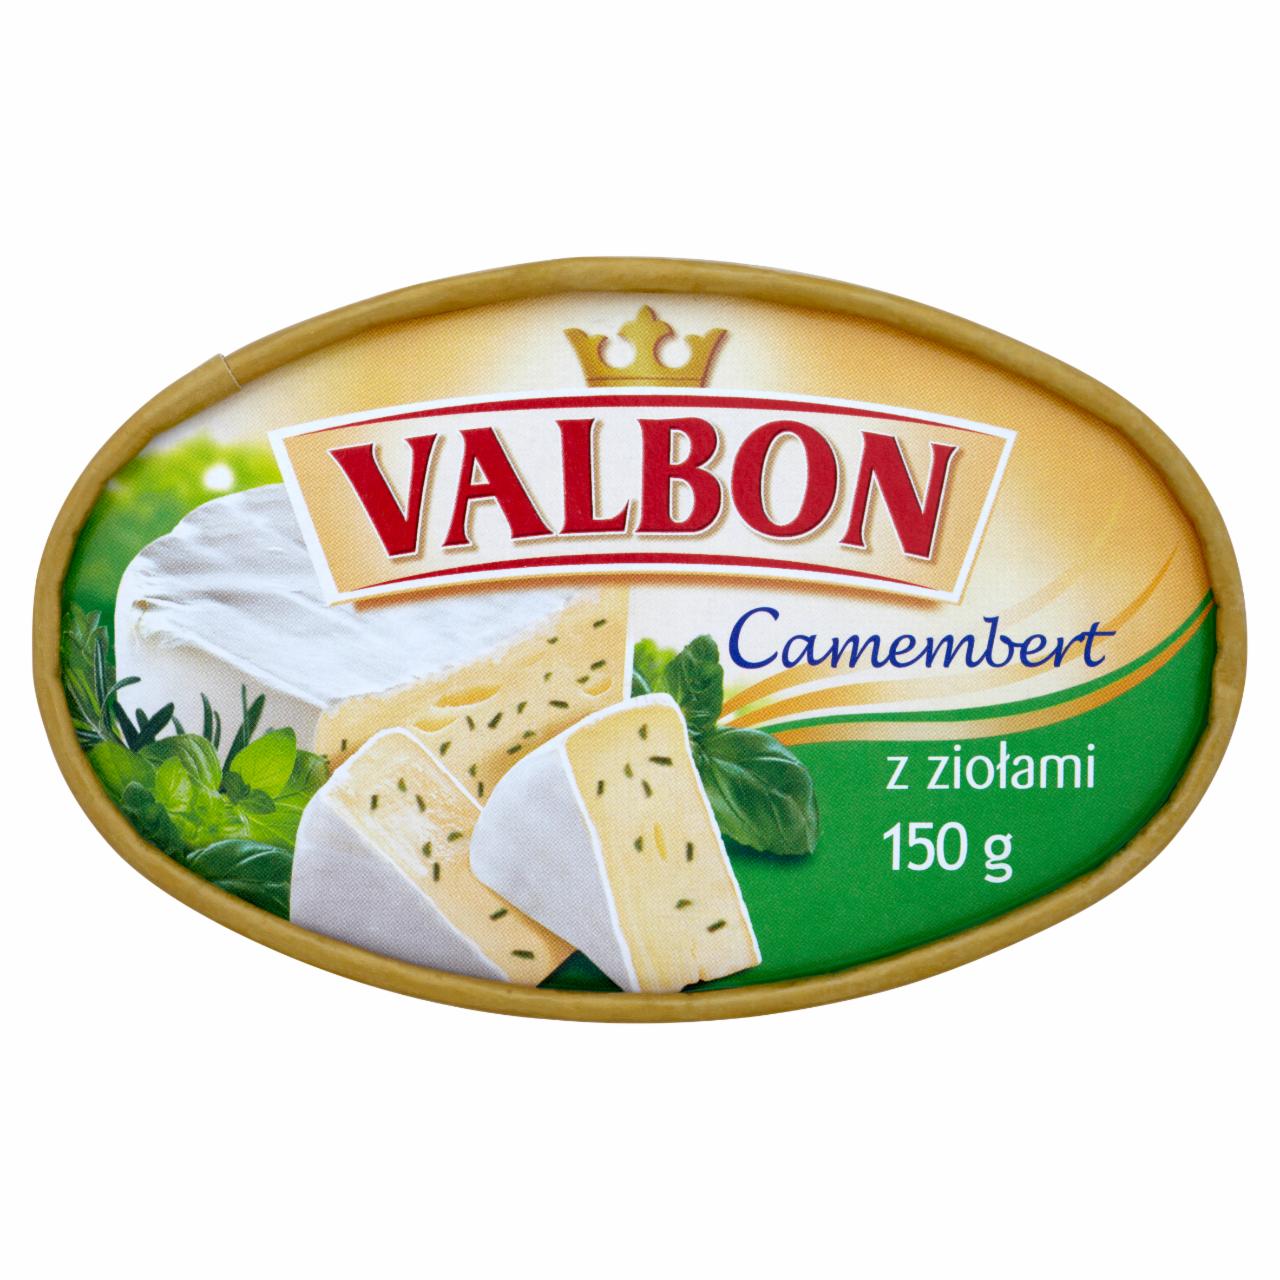 Zdjęcia - Valbon Camembert z ziołami 150 g